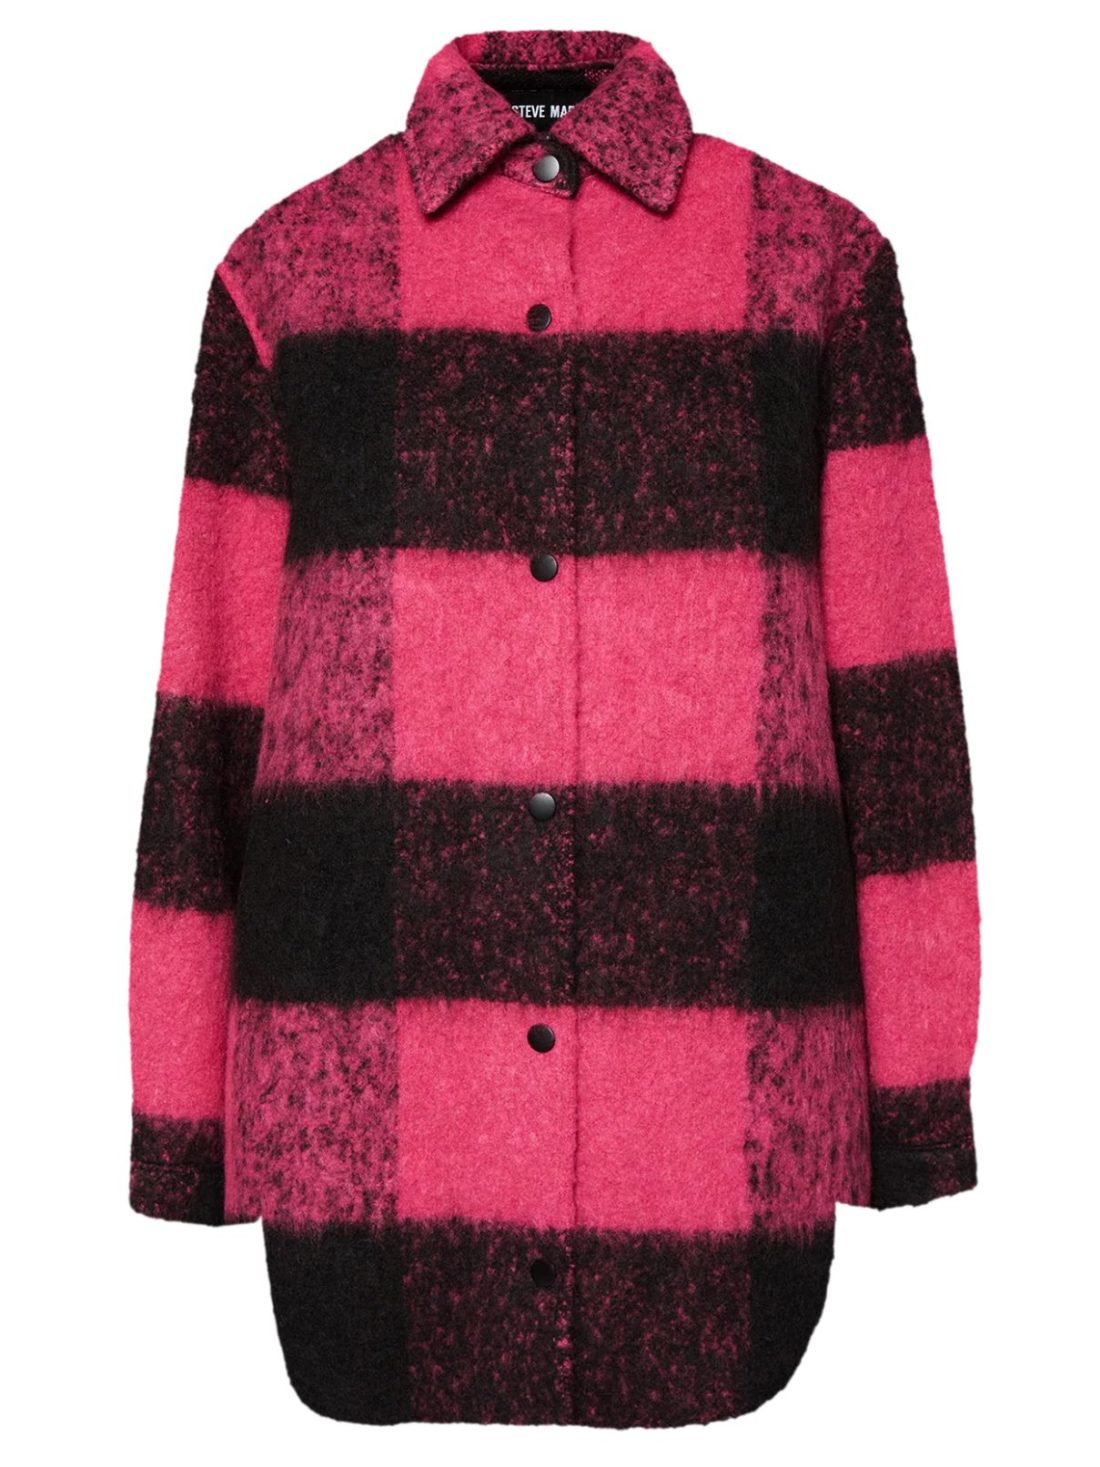 bb dakota by steve madden eldridge shirt jacket in hot pink/black